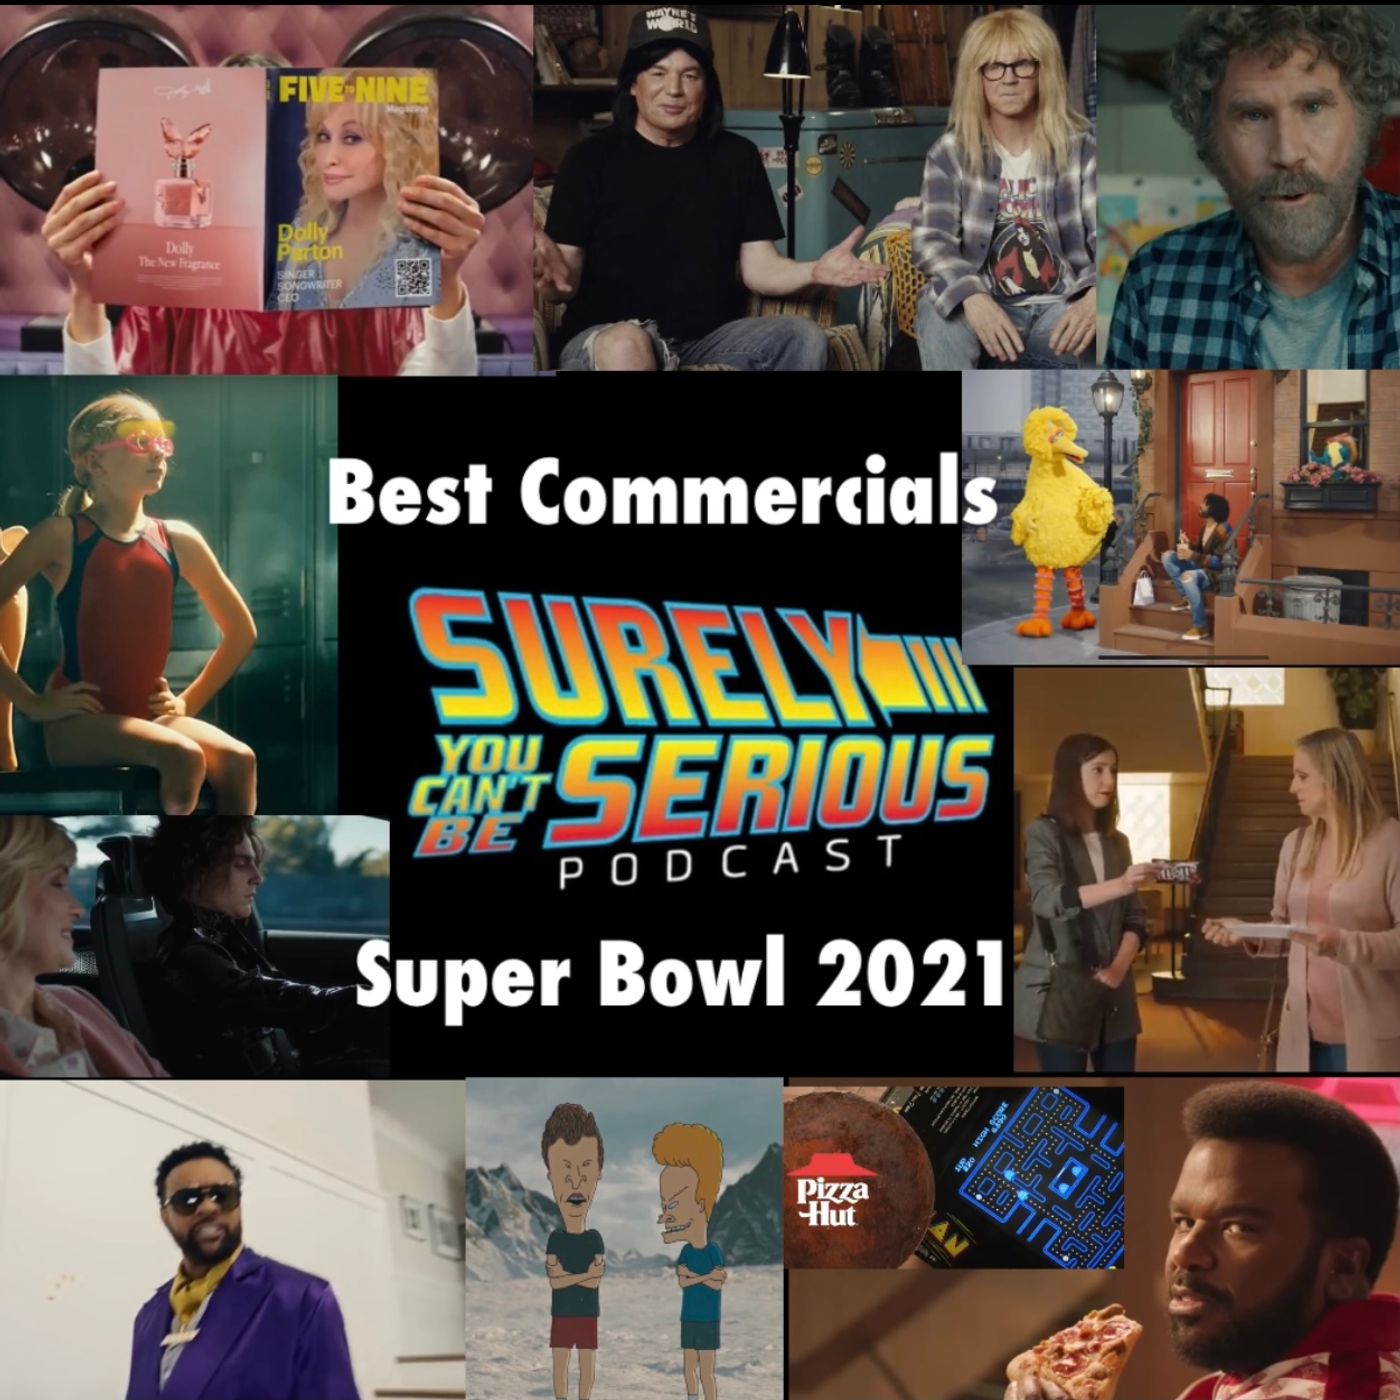 Best Super Bowl Commercials 2021 Image